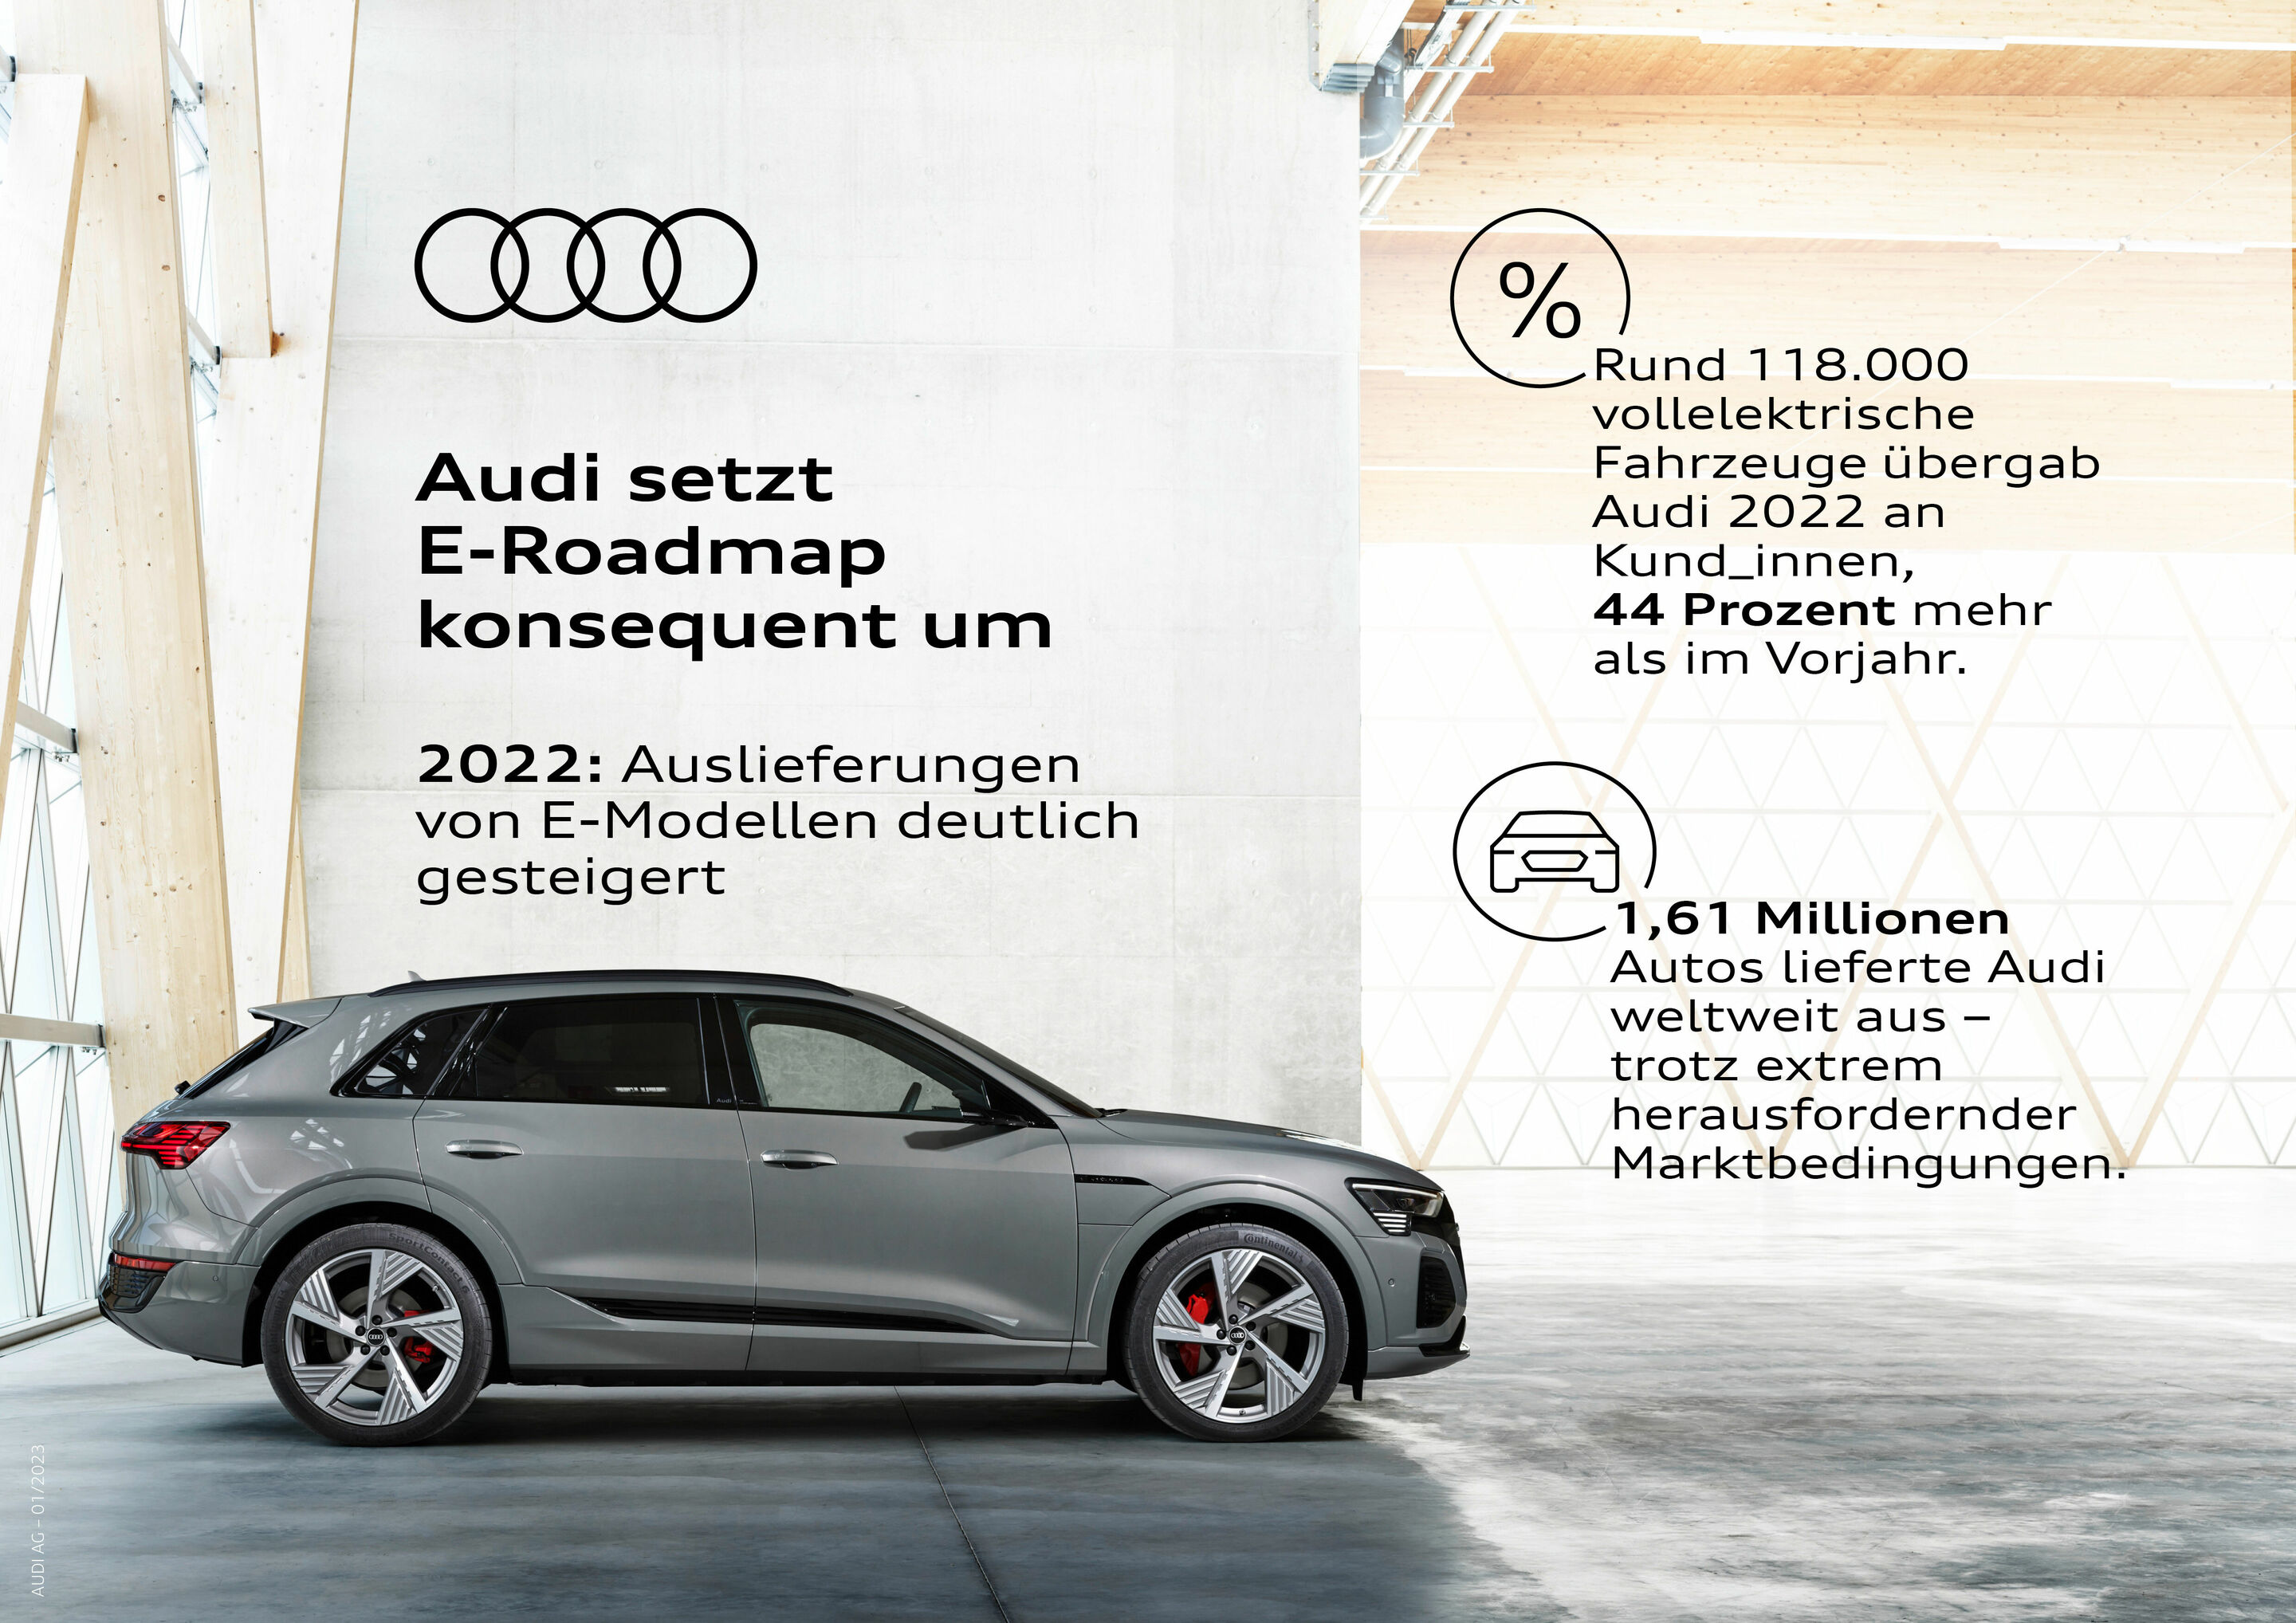 Audi setzt E-Roadmap konsequent um